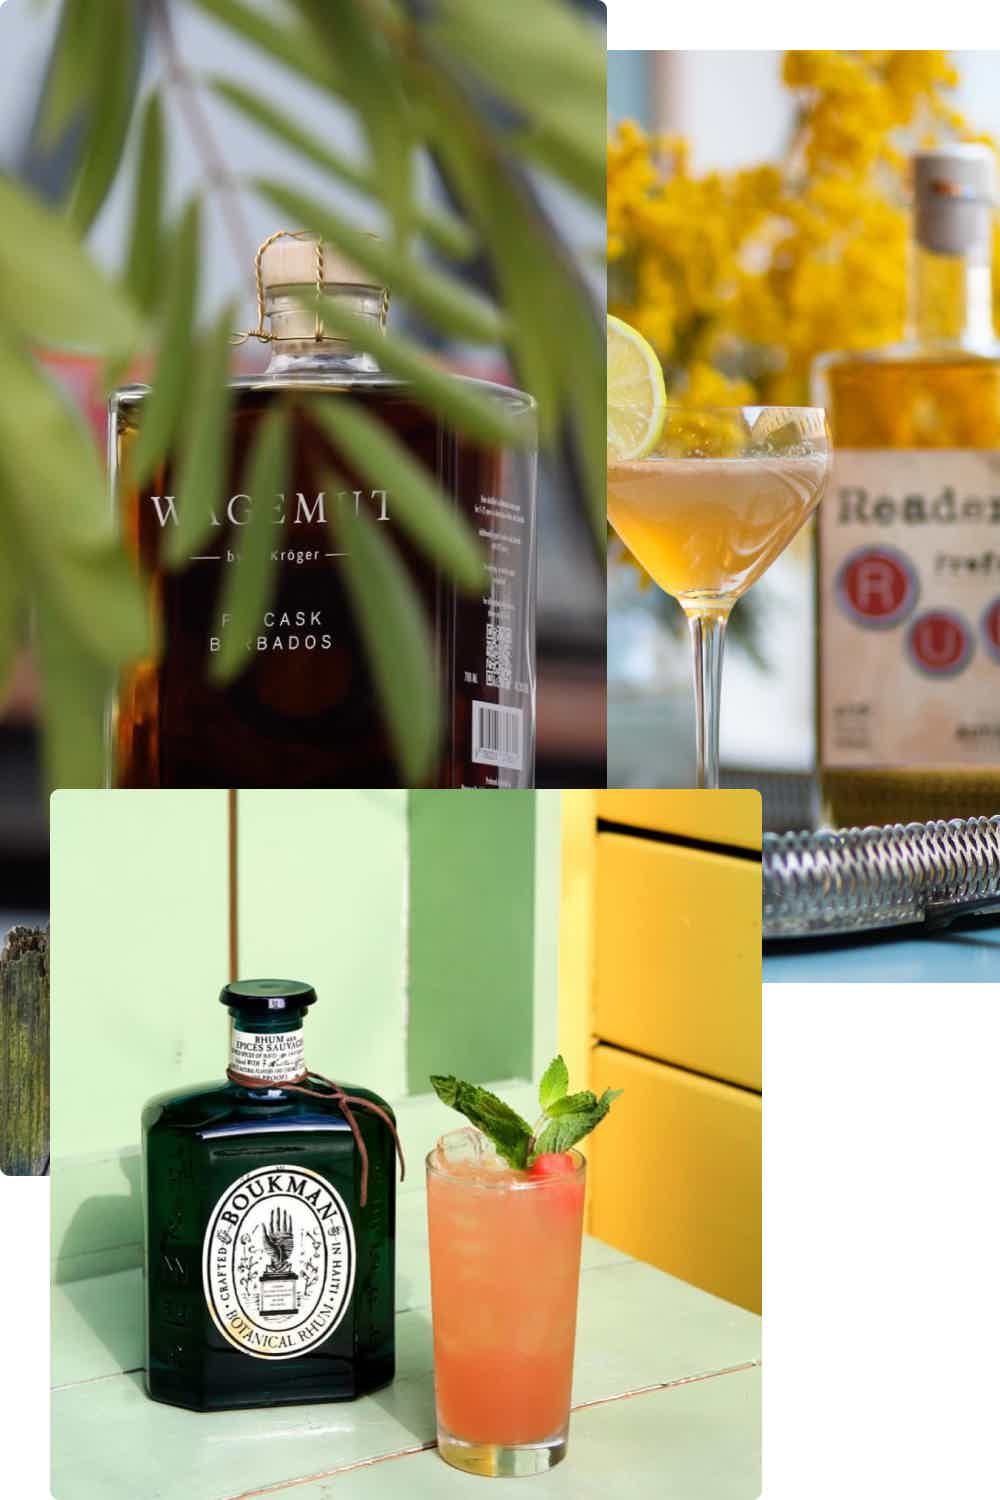 Rum Bundle: Readers' Rum, BOUKMAN BOTANICAL RHUM, Wagemut PX Cask